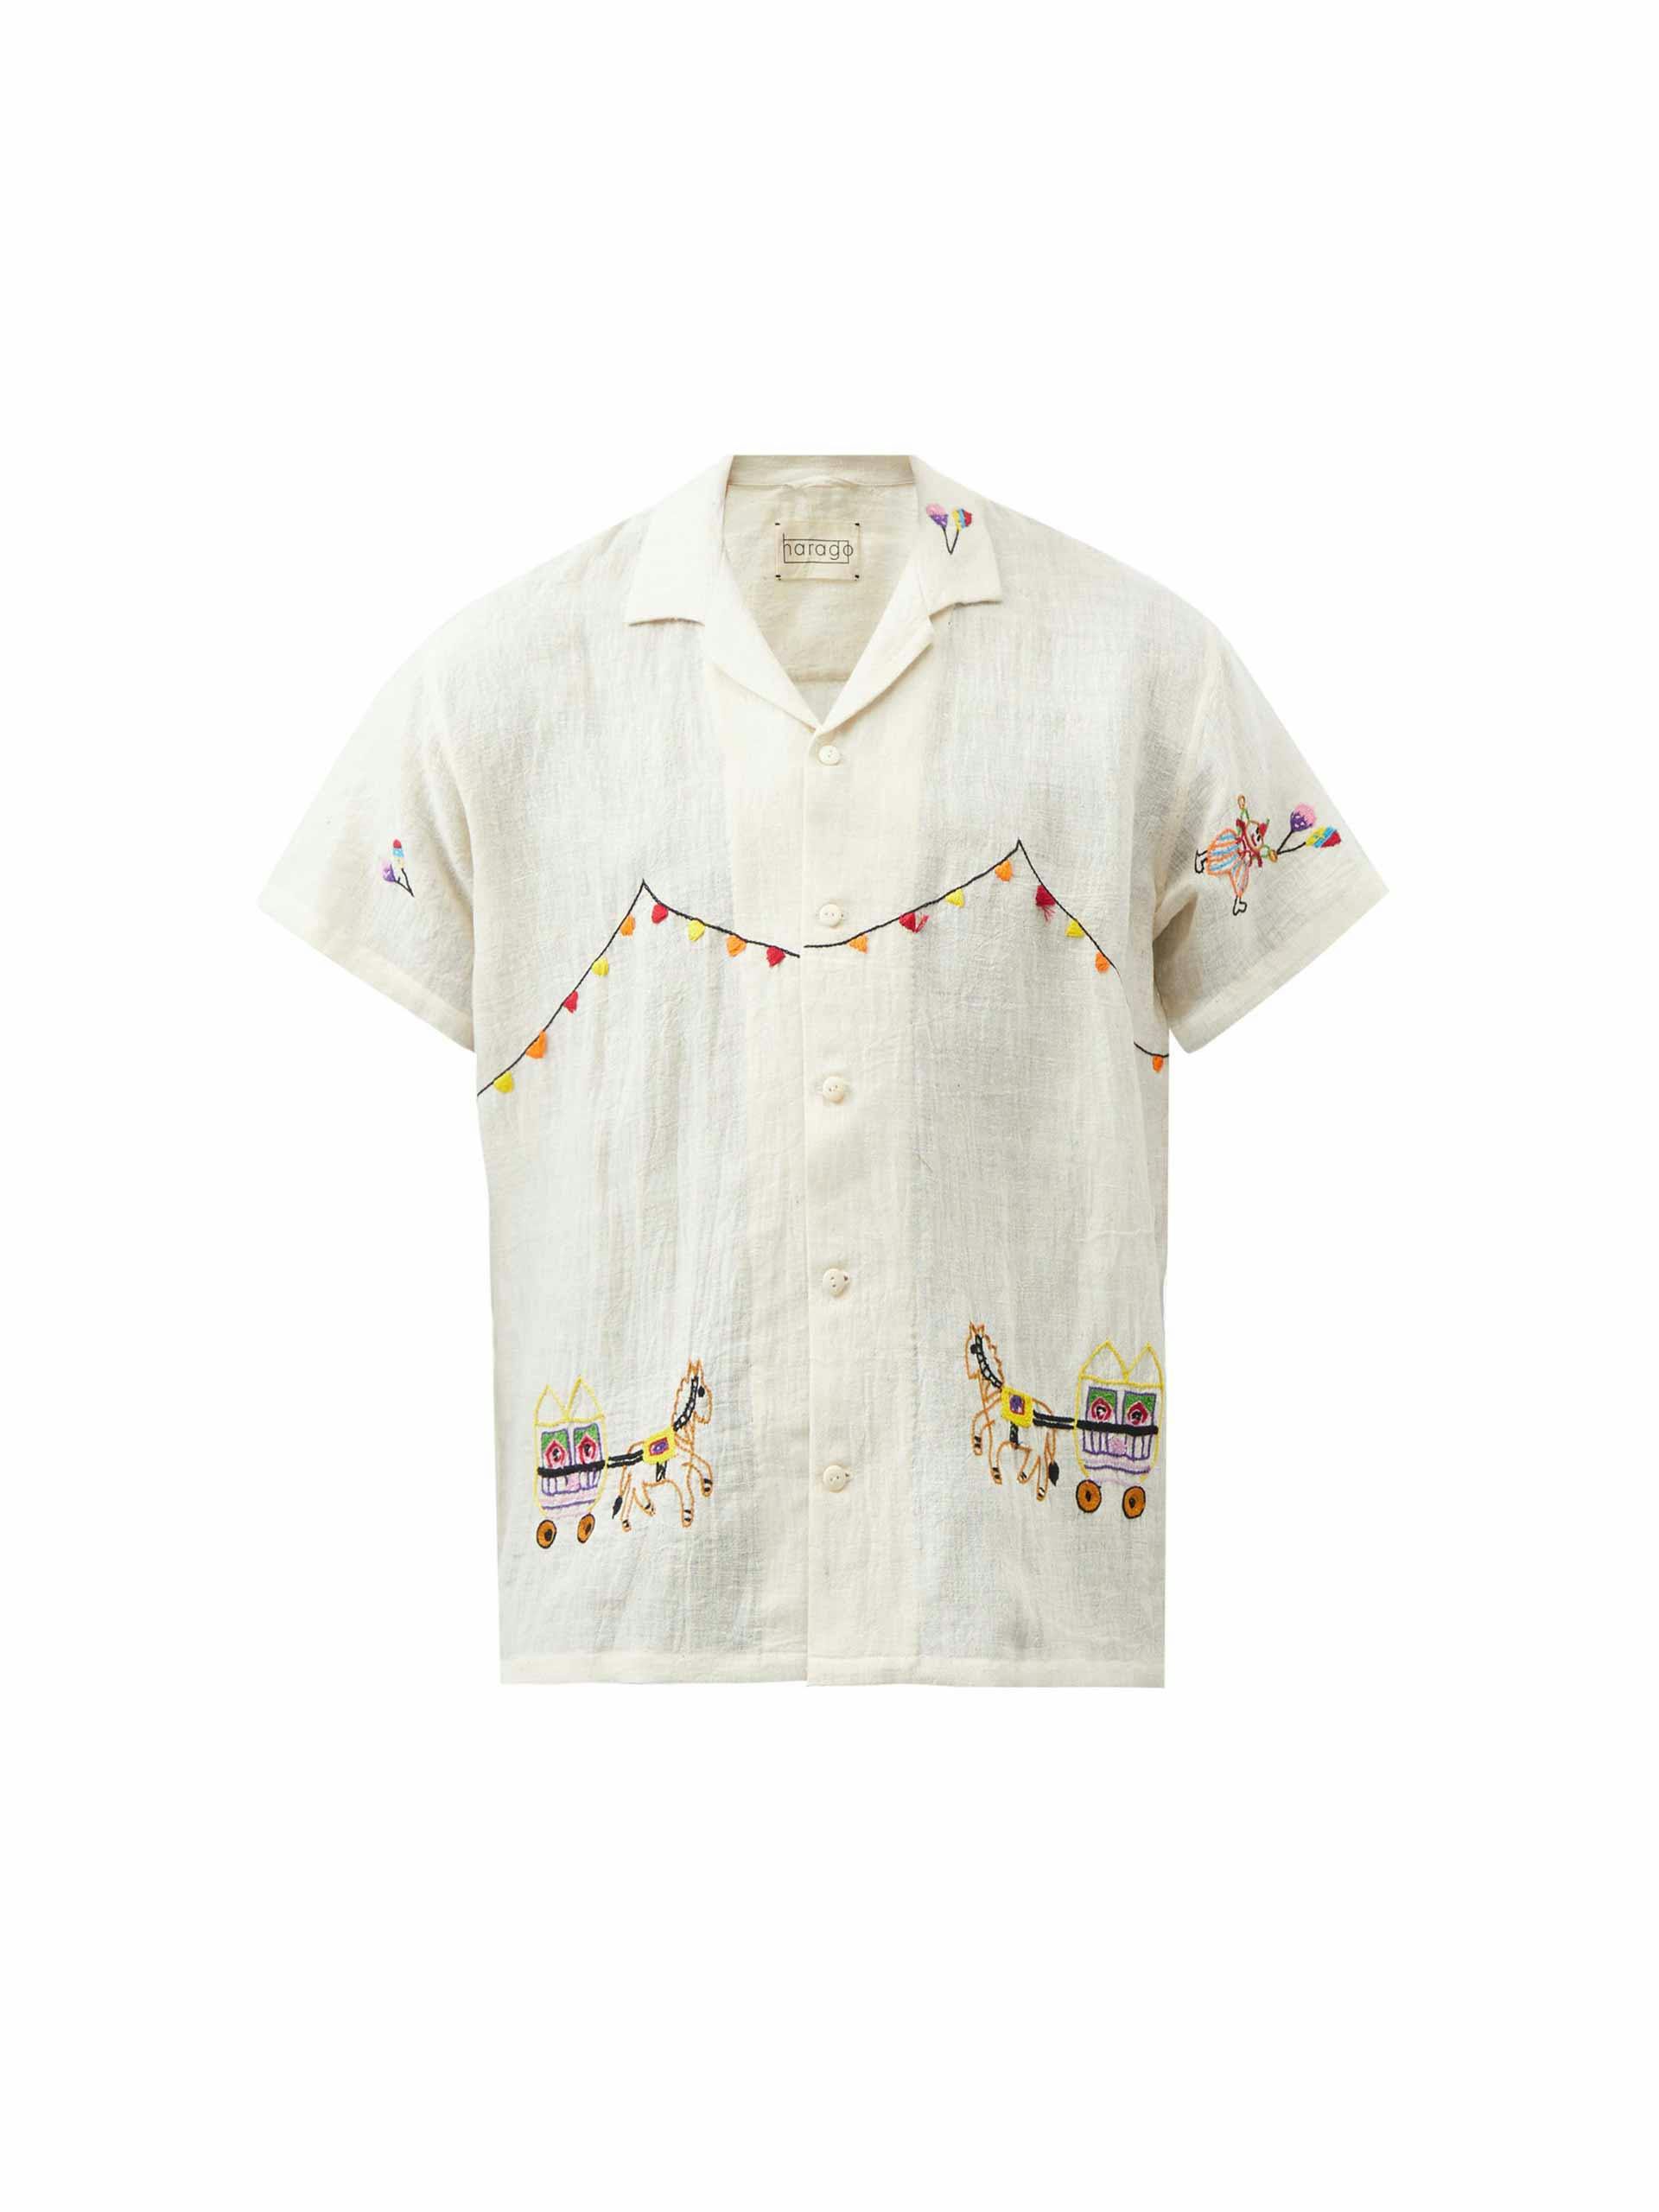 White embroidered linen shirt